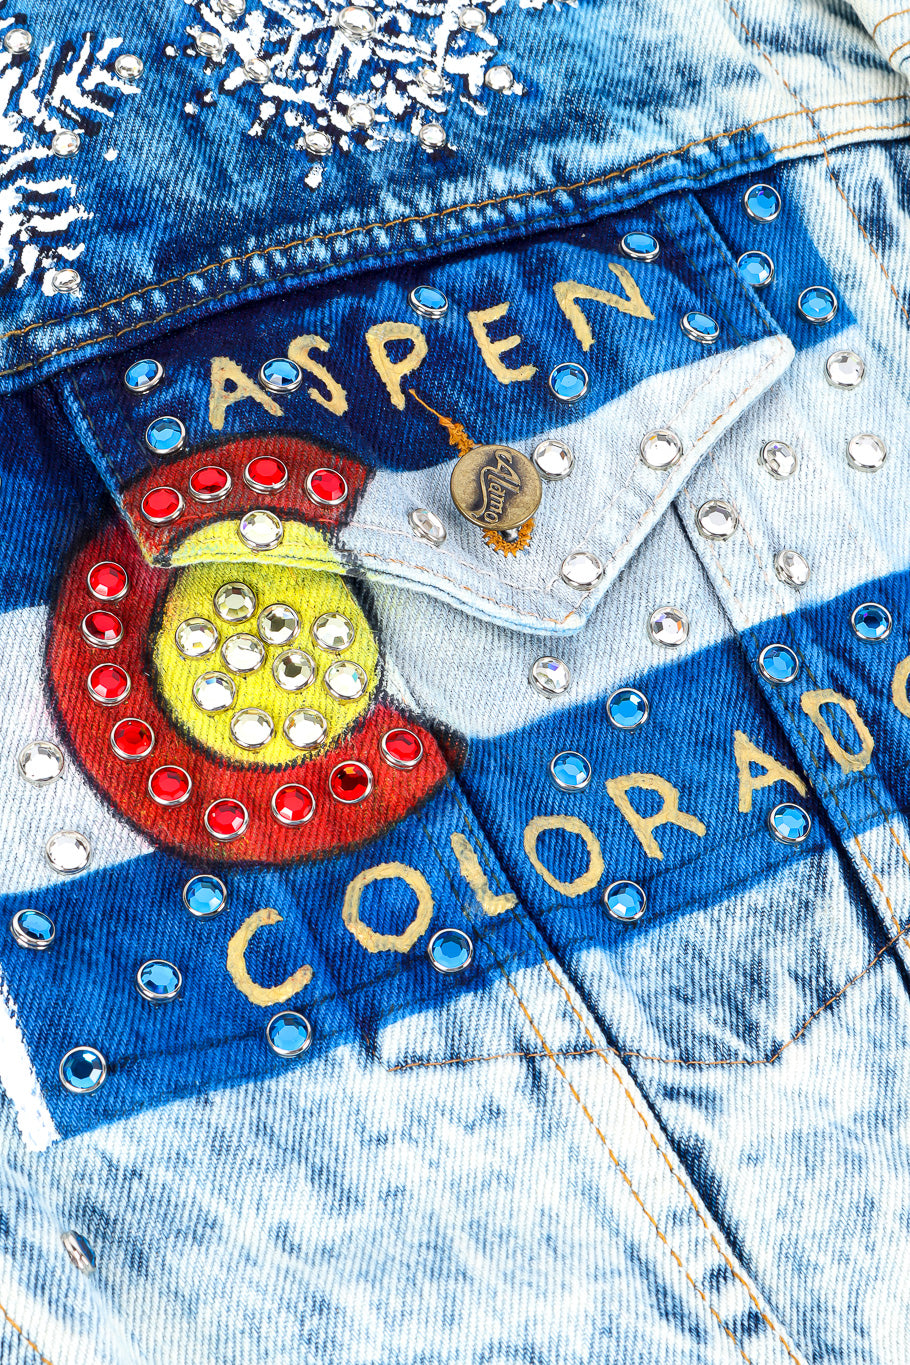 Aspen Colorado jacket by Tony Alamo pocket detail close @recessla